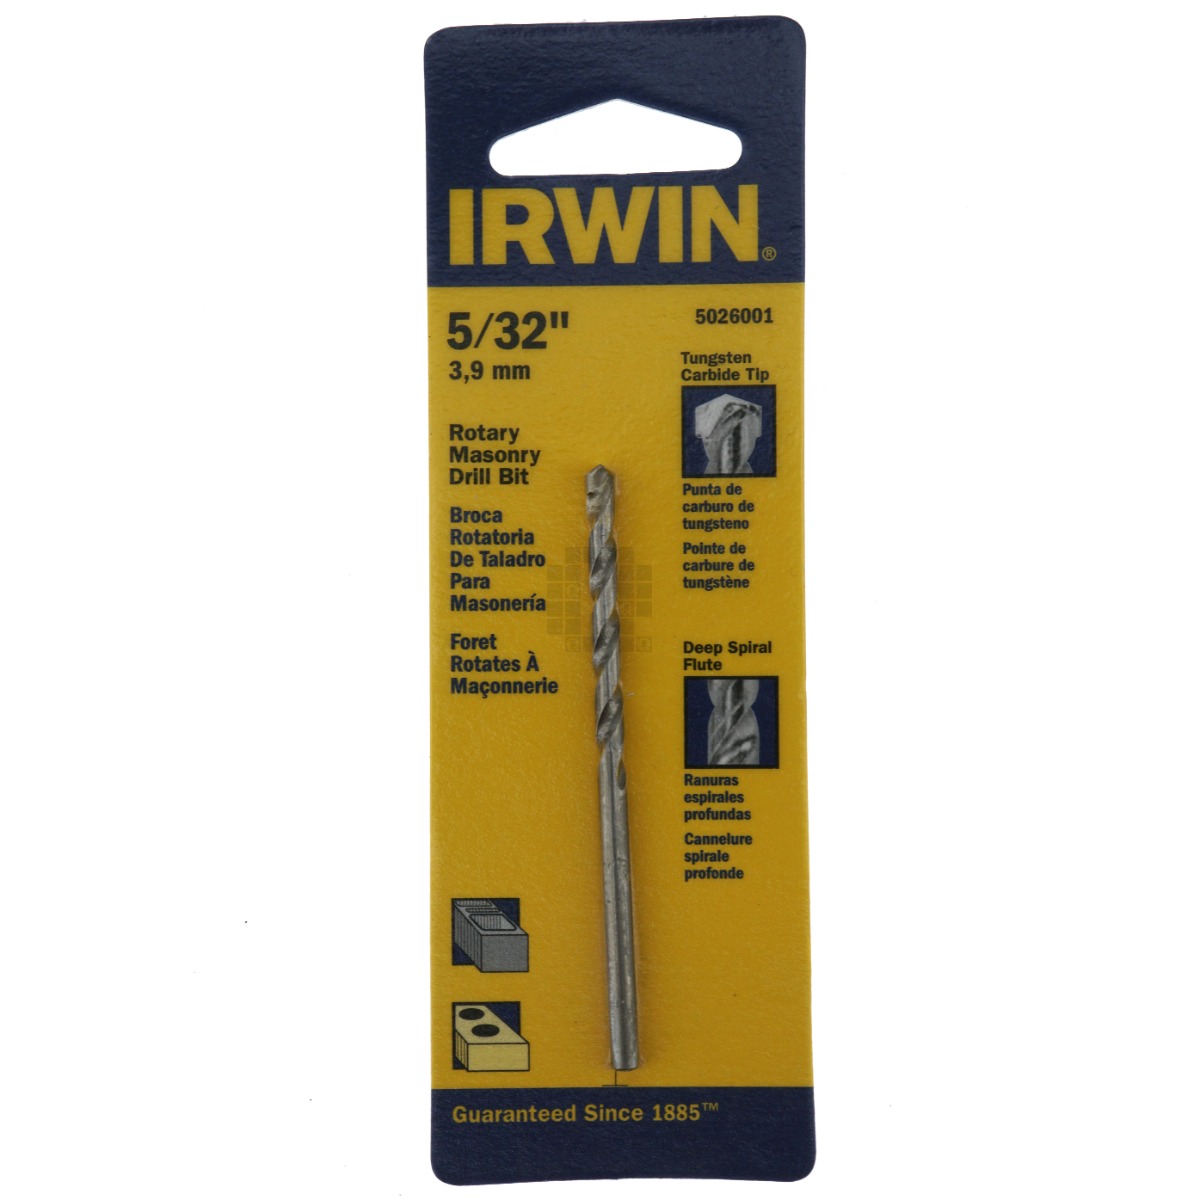 Irwin 5026001 5/32" Rotary Masonry Tungsten Carbide Tip Drill Bit